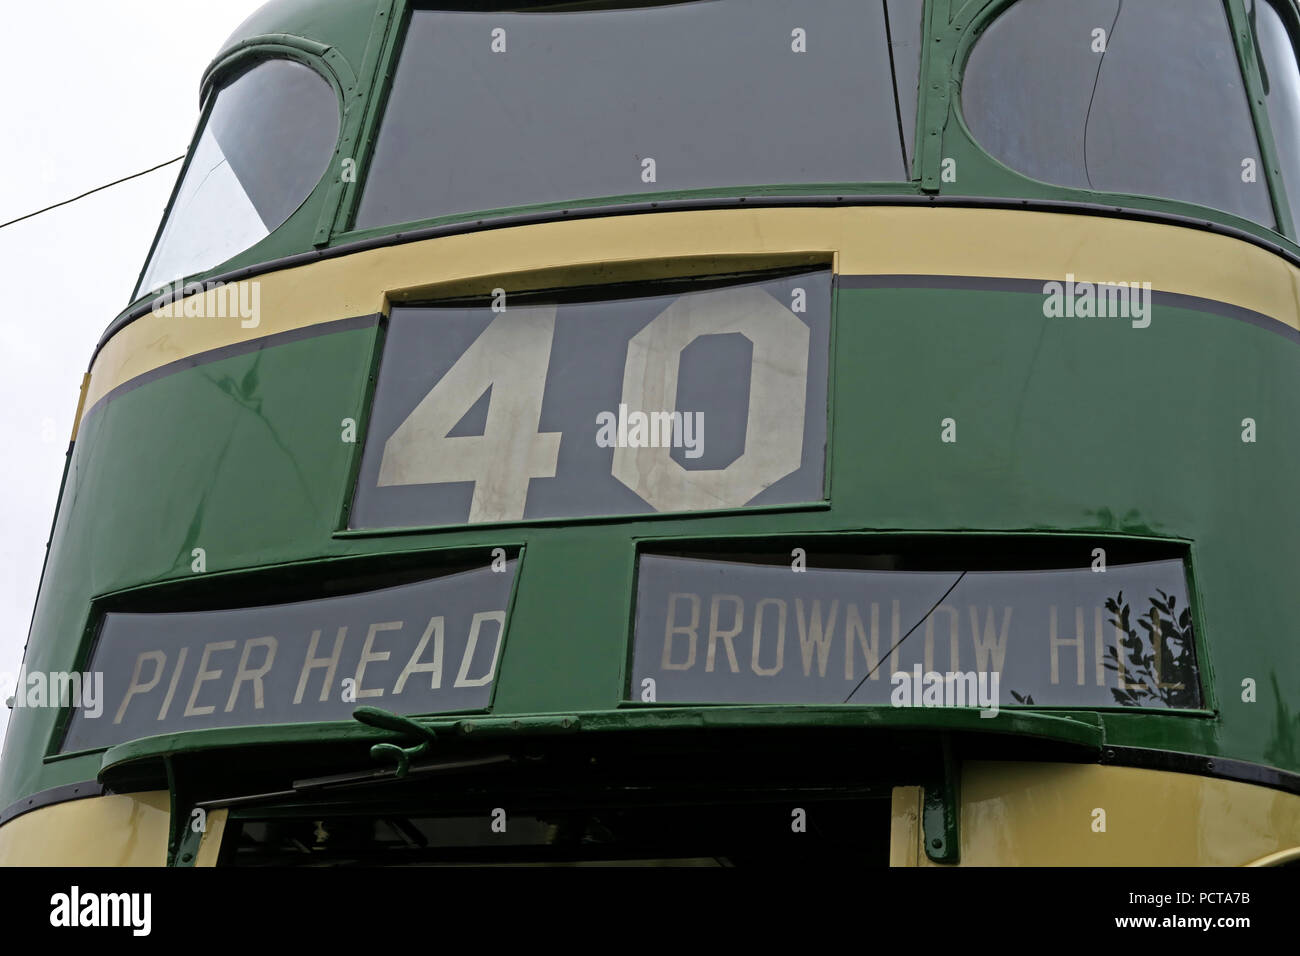 Wirral pubblico Tram, Crema Verde Pierhead Brownlow hill tram, Merseyside, North West England, Regno Unito Foto Stock